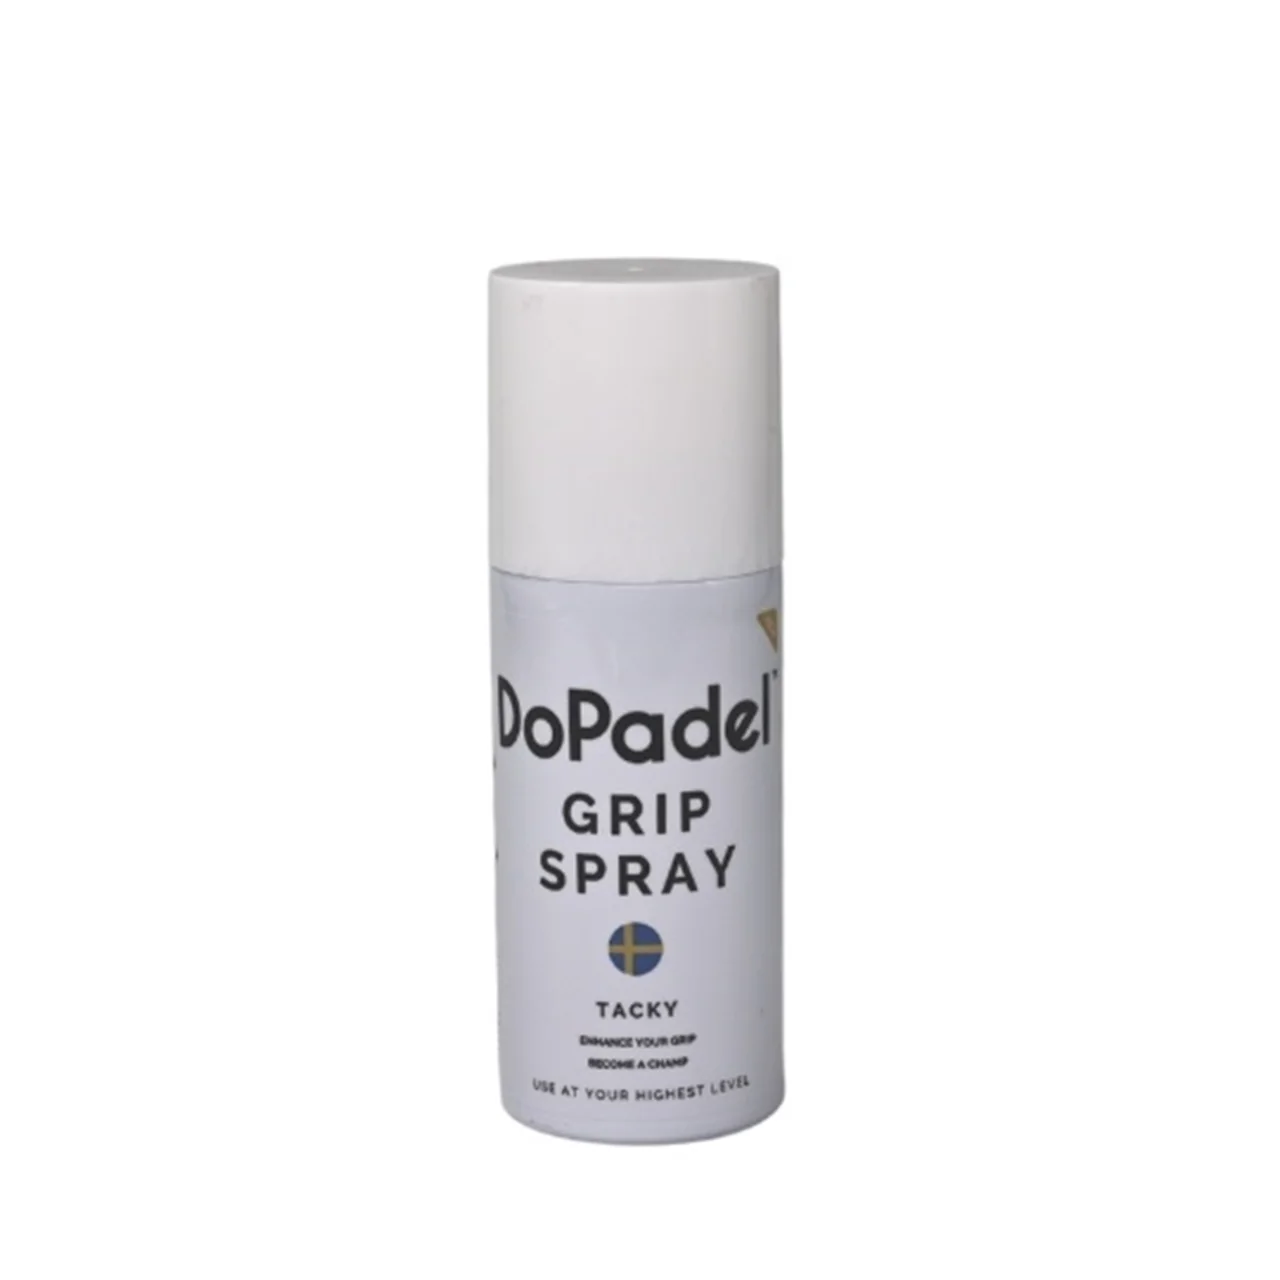 DoPadel Grip Spray